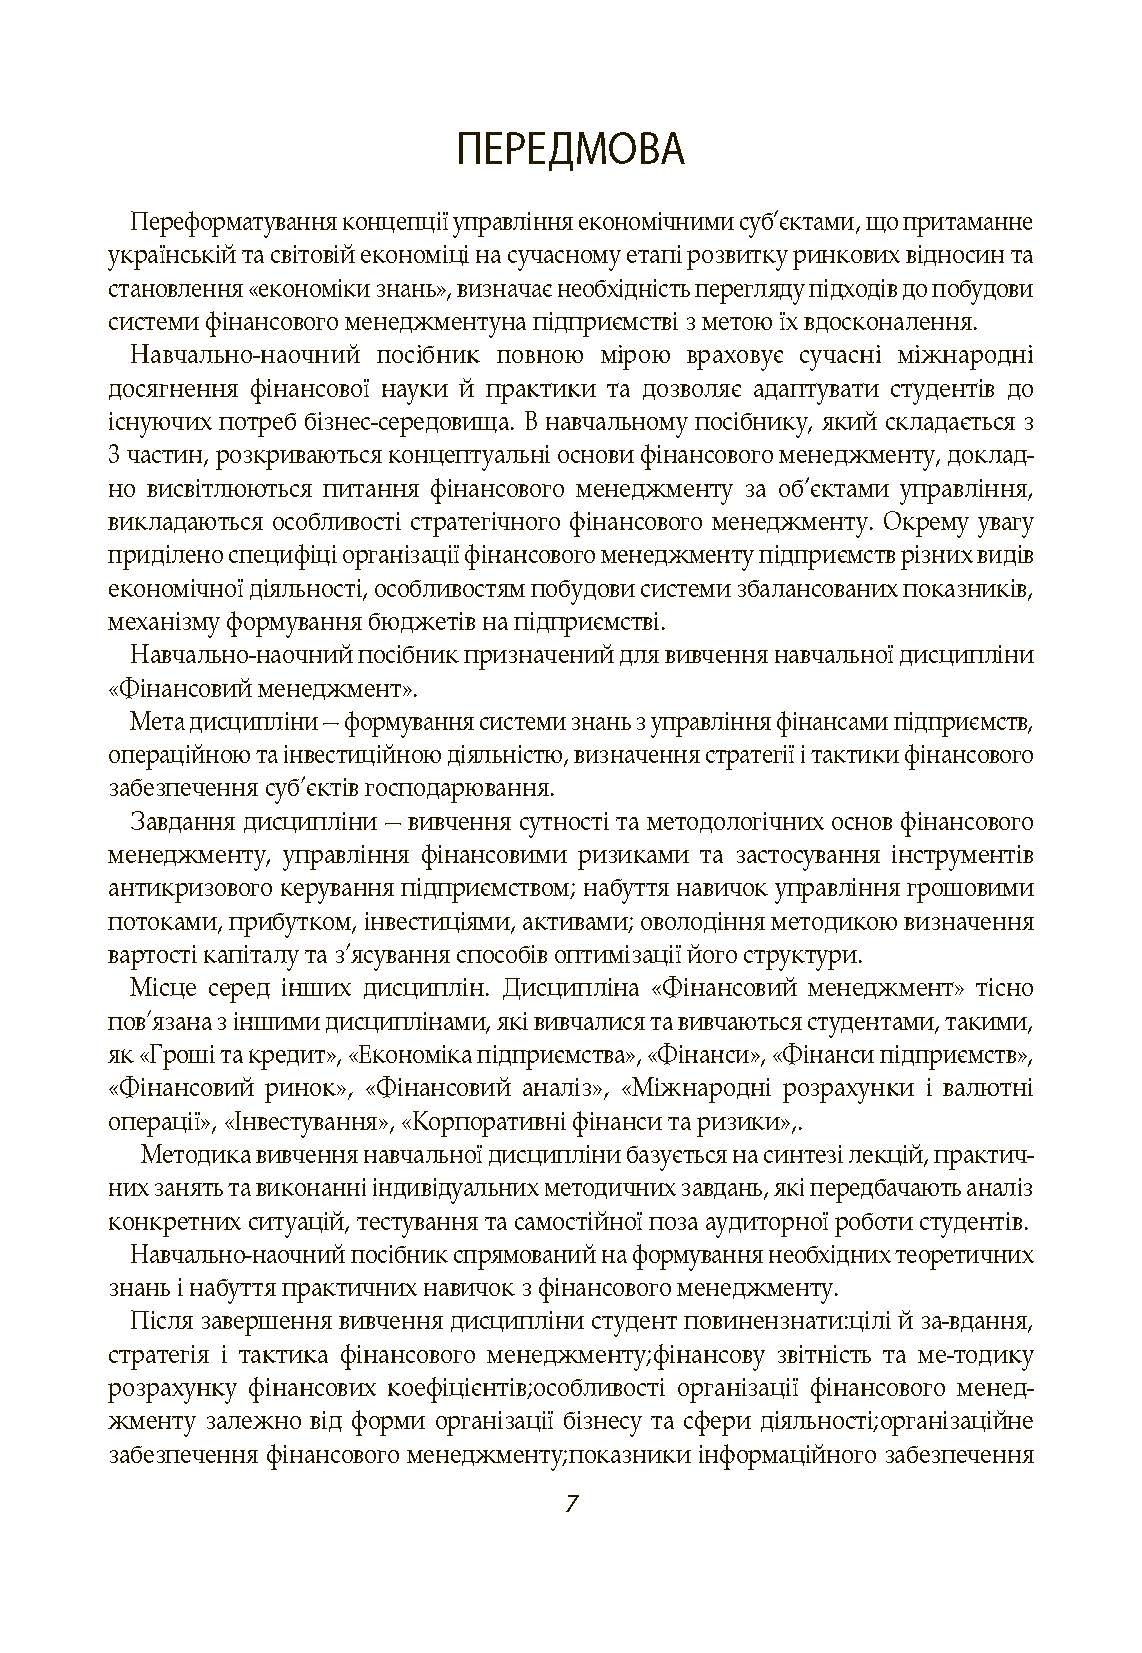 Фінансовий менеджмент. Кузнецова С.А. (2019 год)). Автор — Кузнецова С.А.. 